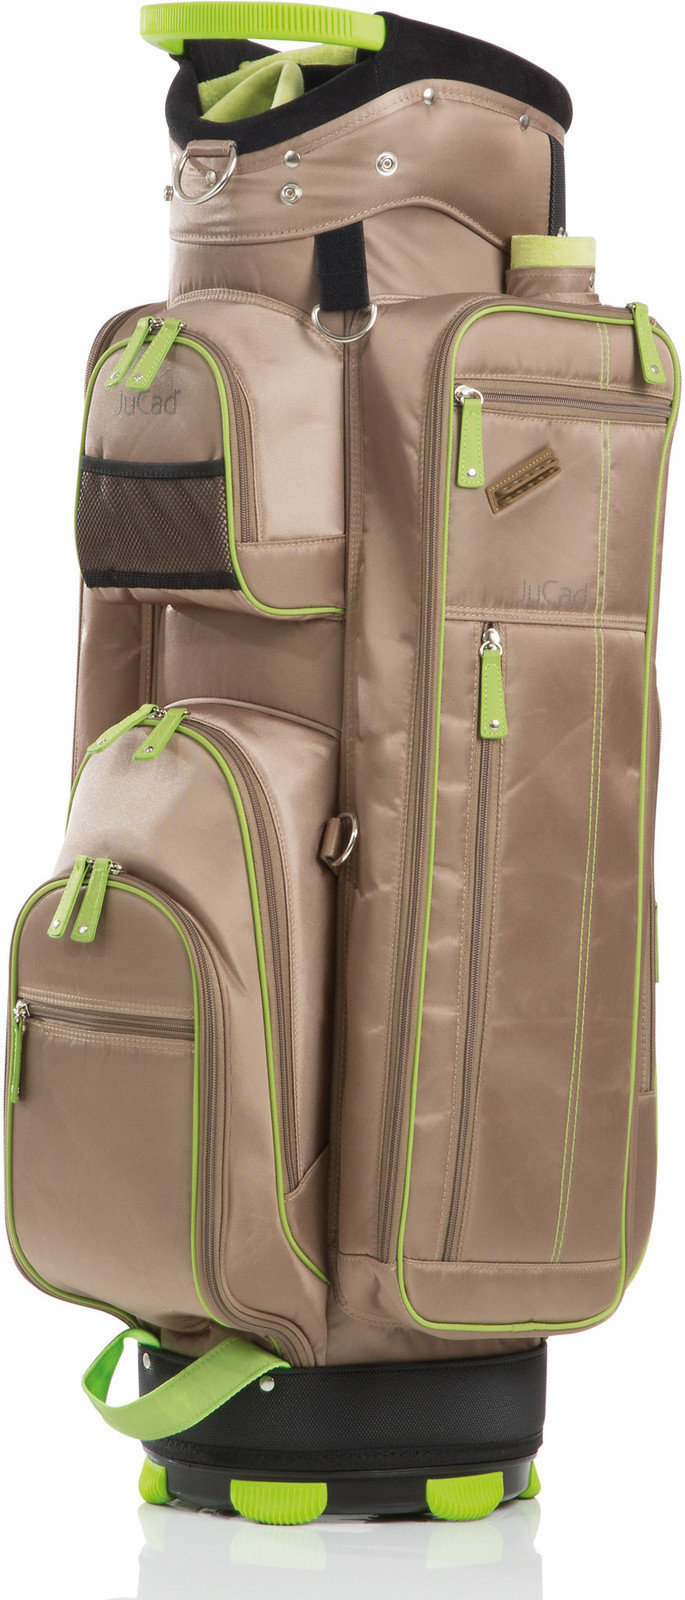 Cart Bag Jucad Function Plus Beige/Green Cart Bag